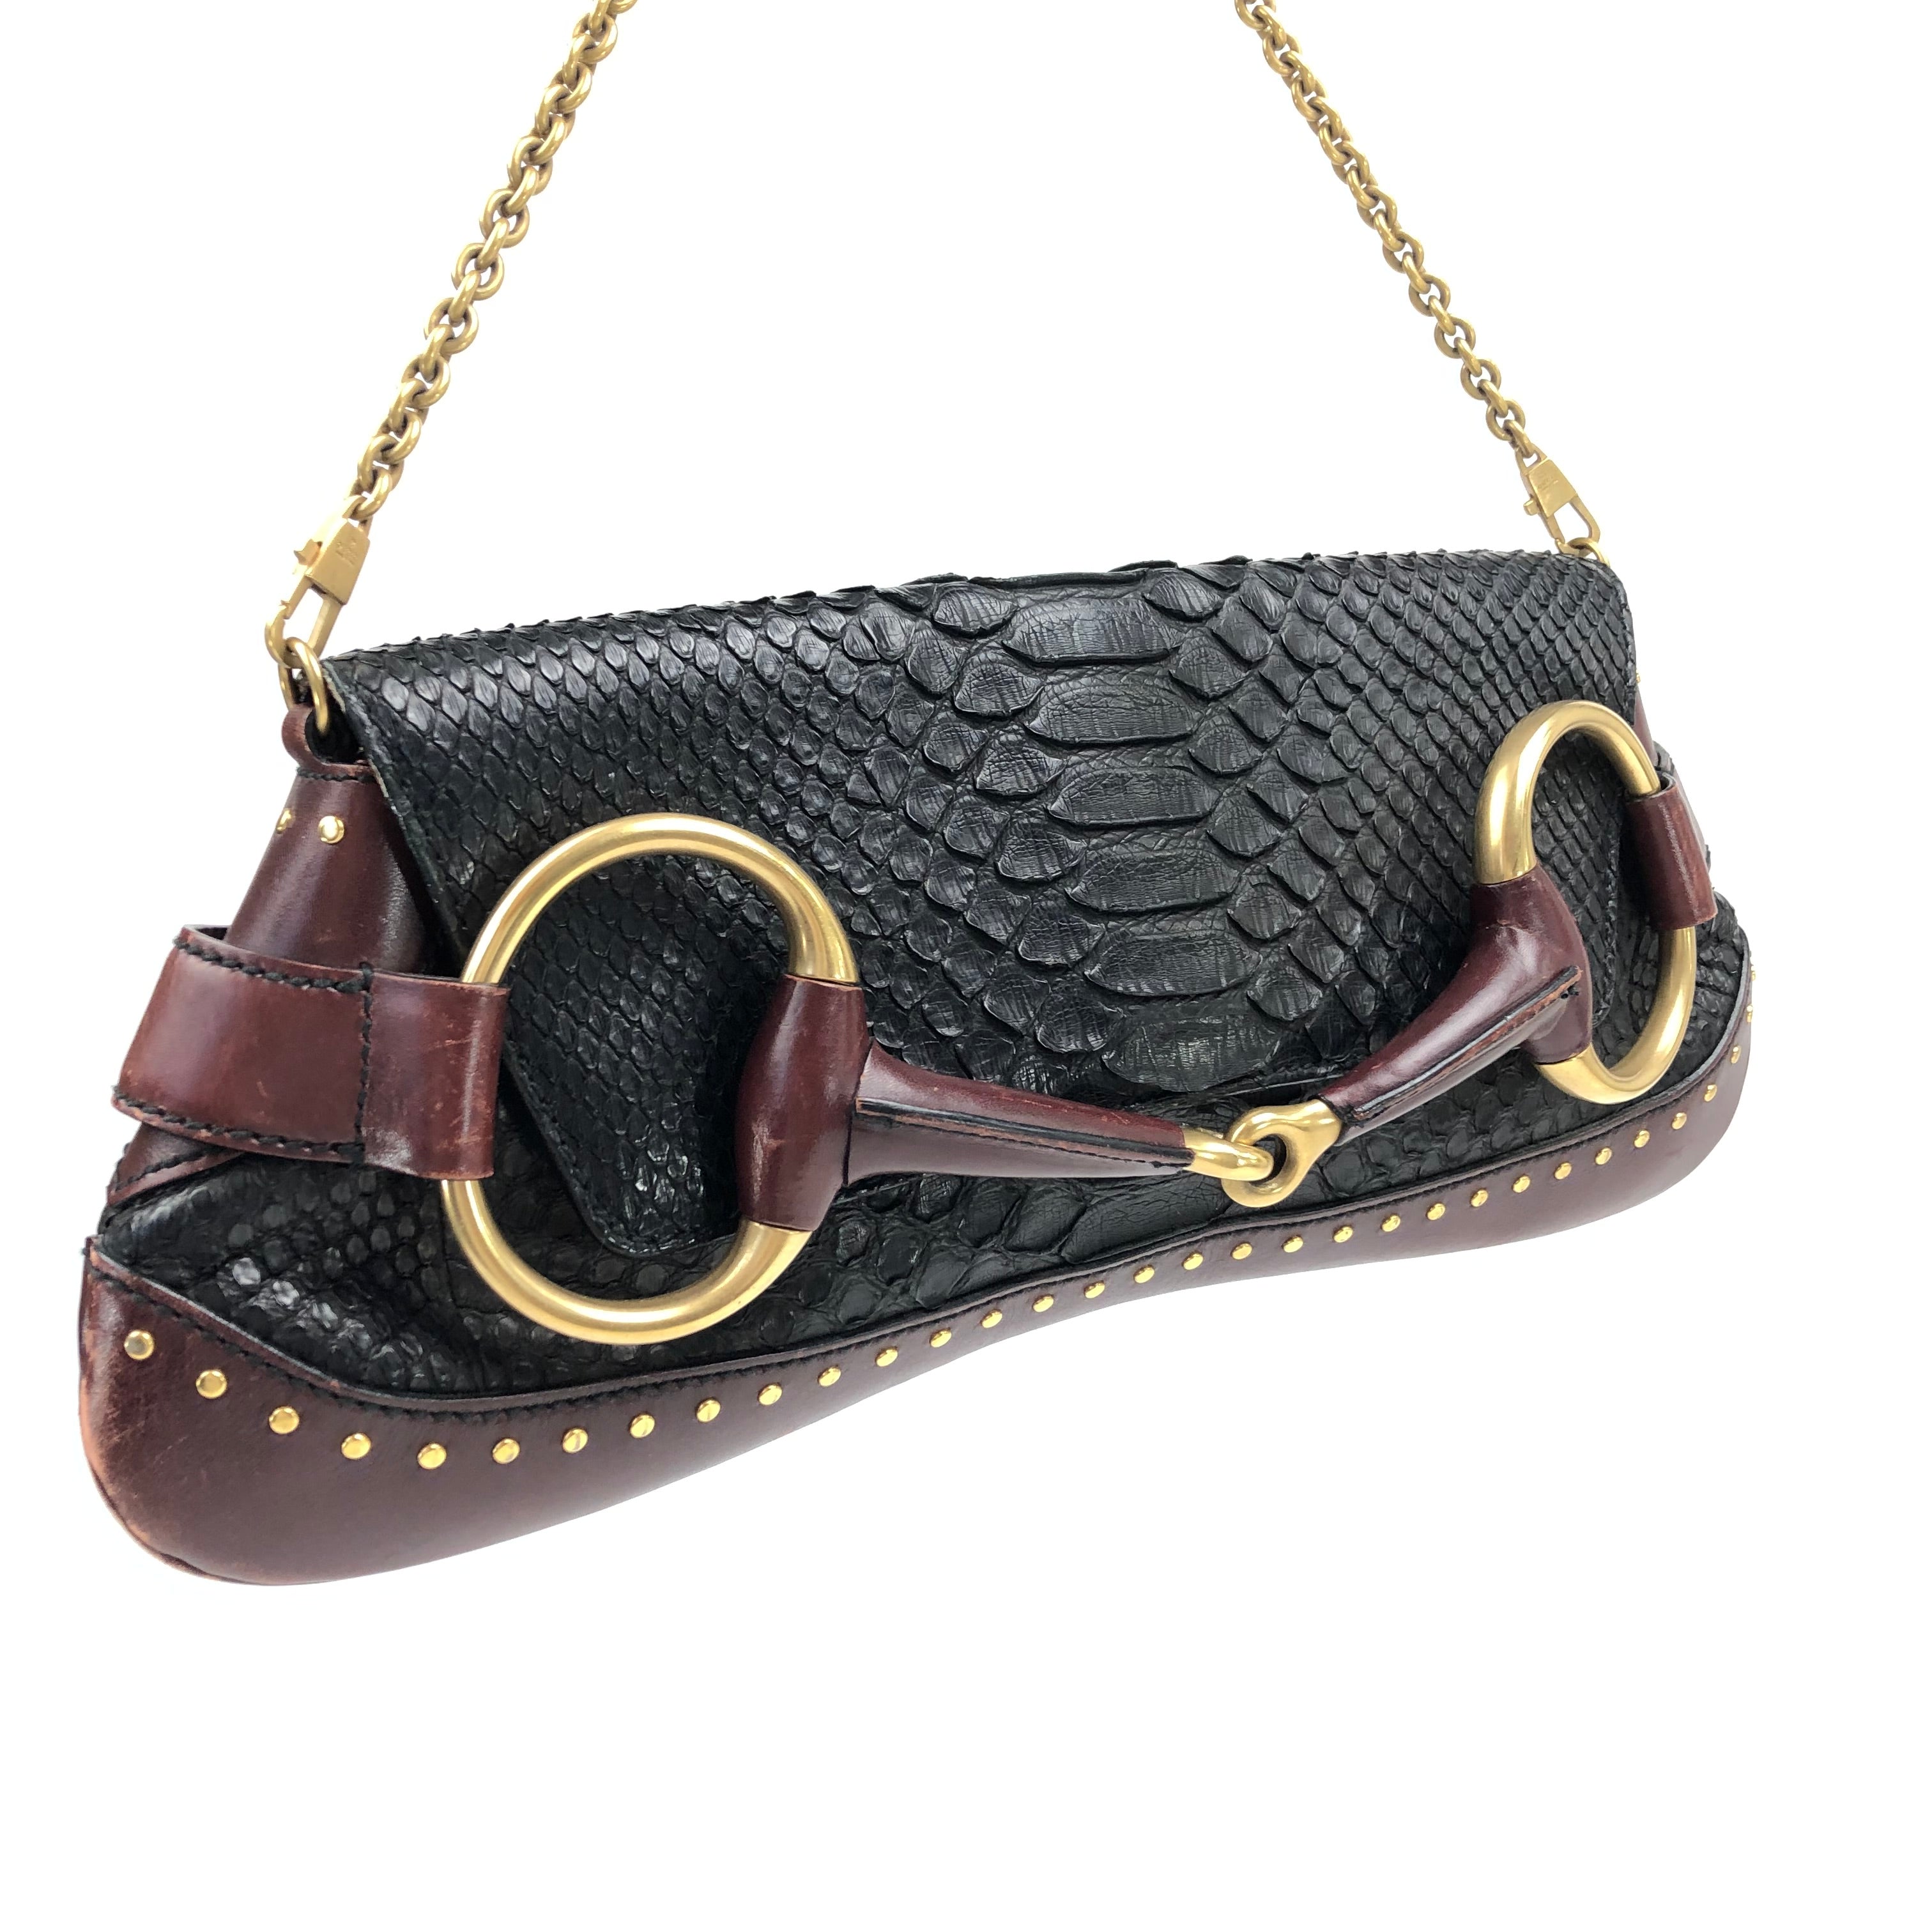 Gucci Horsebit Tom Ford Python Chain Shoulder Bag